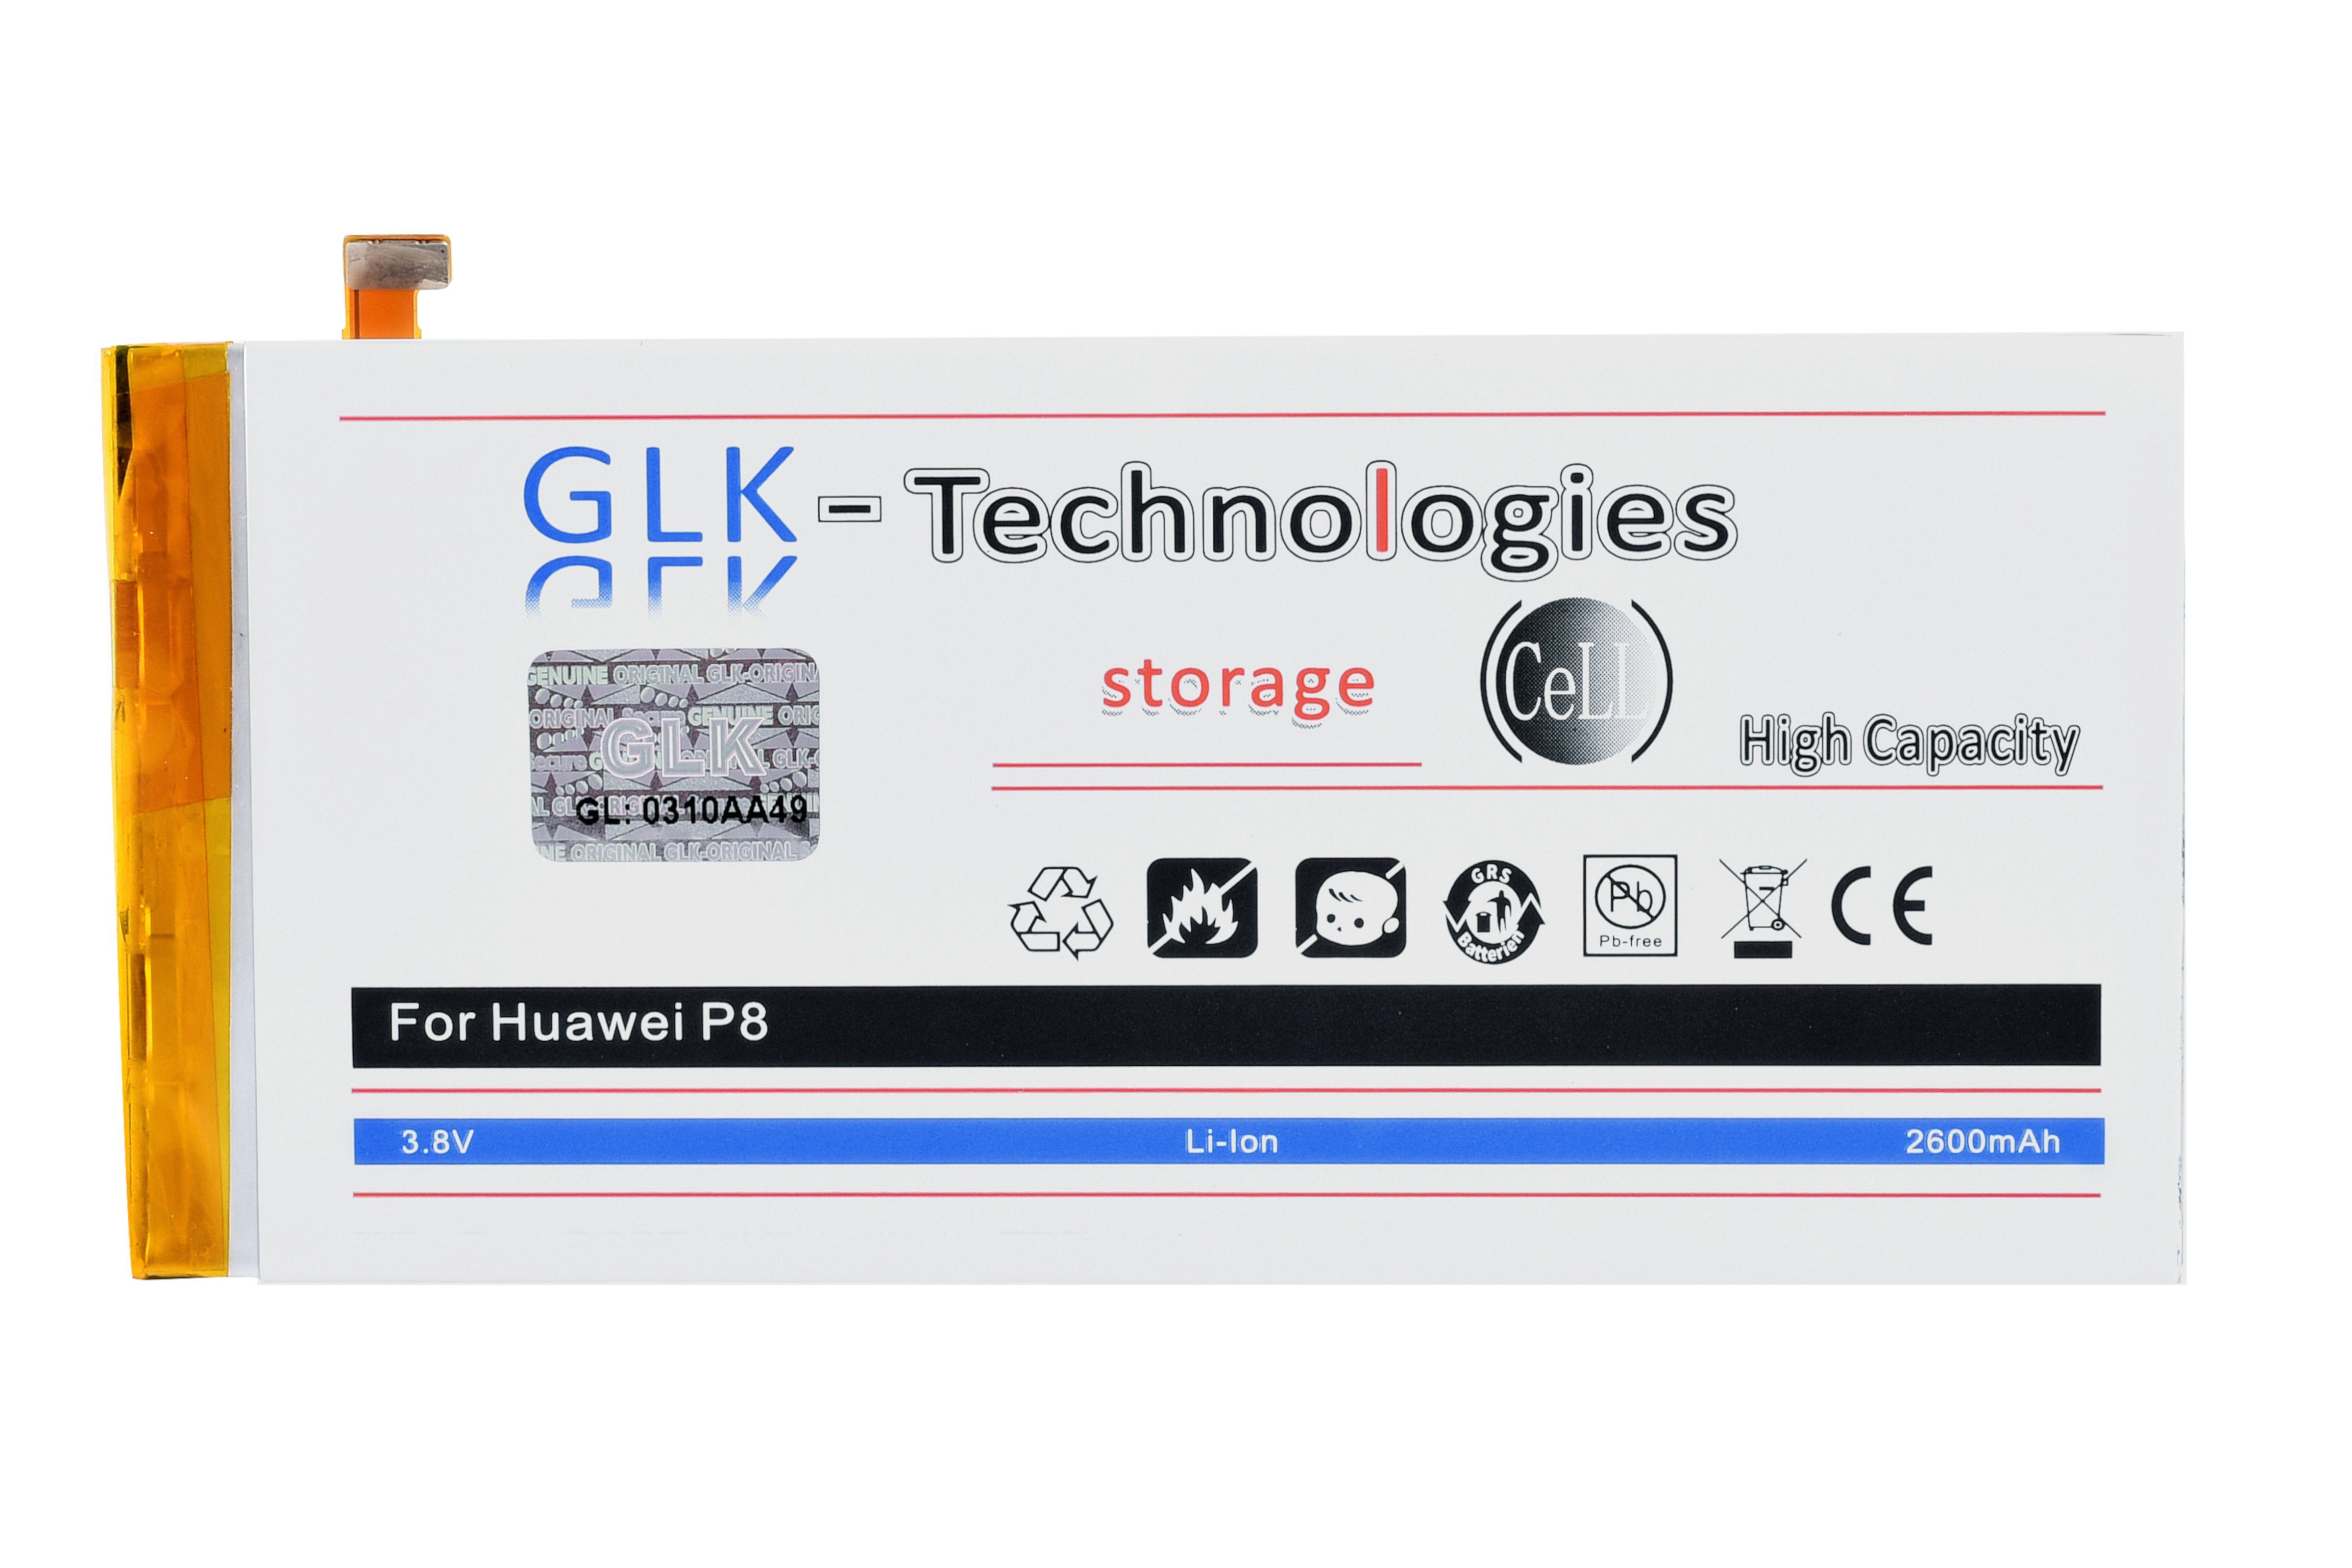 Akku, Kit mAh Power Huawei Ersatzakku Original GLK-Technologies Set mAh V) 2600 accu, (3.8 mit P8 inkl. Werkzeug kompatibel 2600 HB3447A9EBW, High Smartphone-Akku Battery, GLK-Technologies